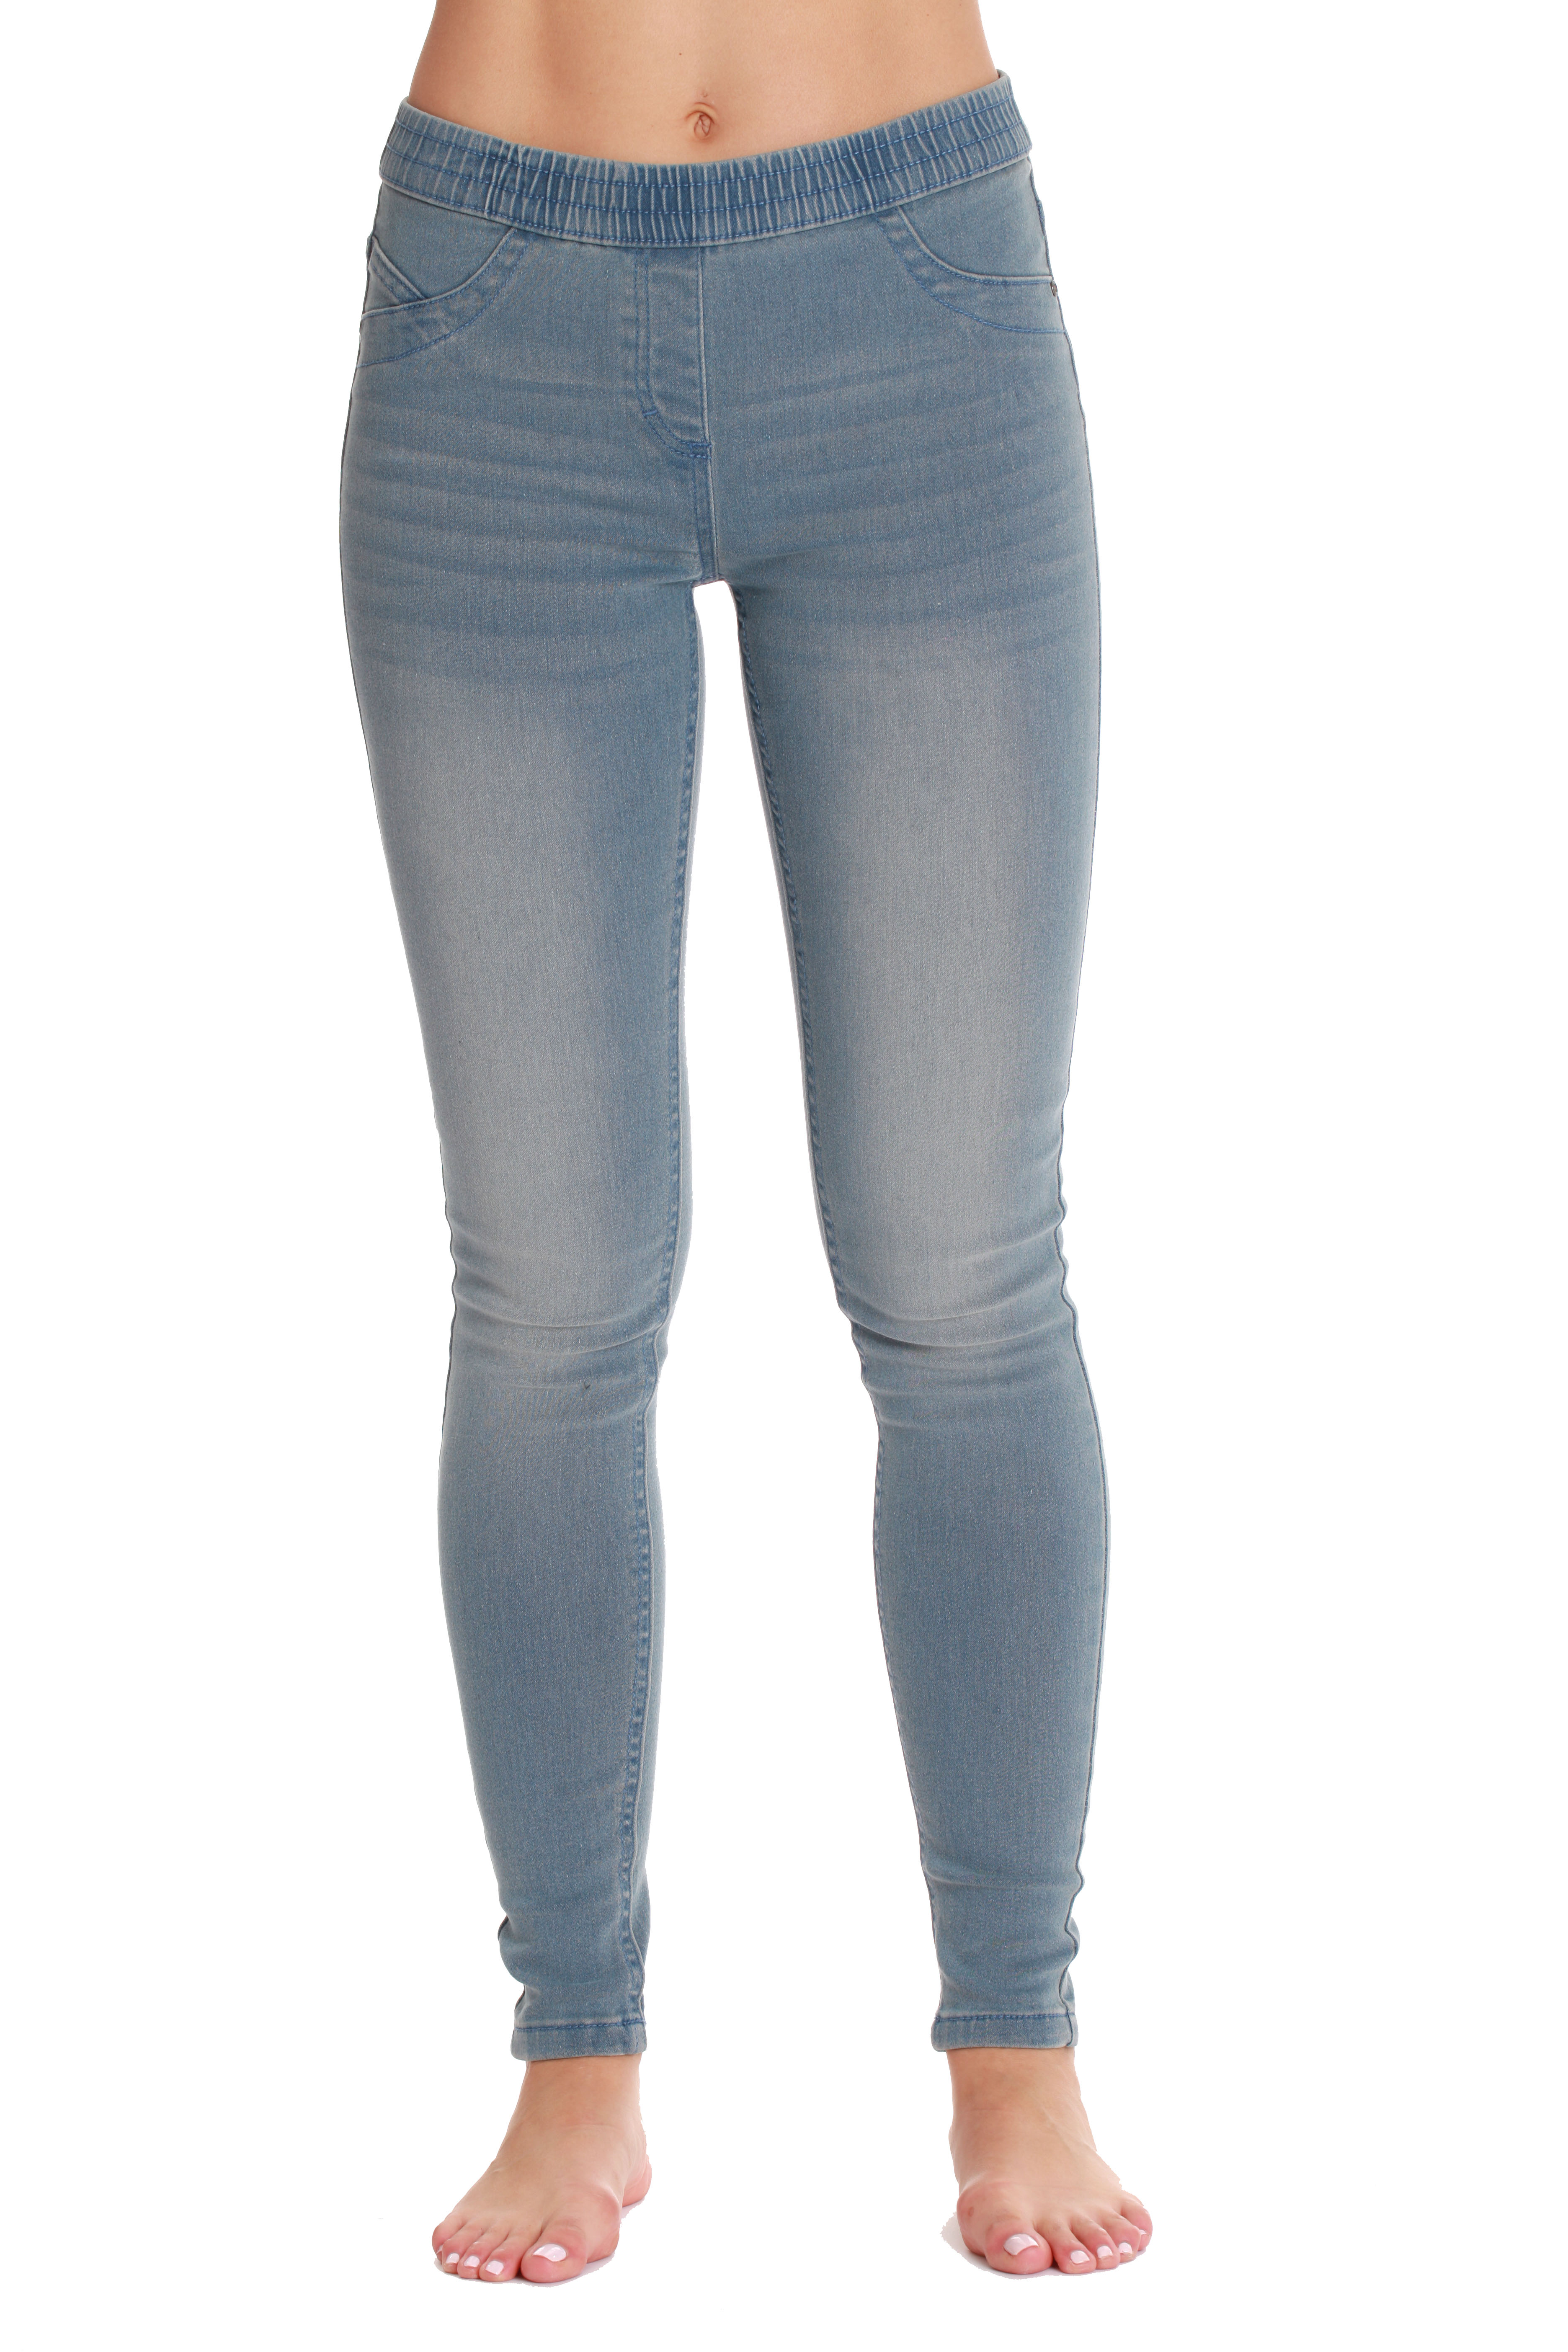 Just Love Women's Denim Jeggings with Pockets - Comfortable Stretch Jeans Leggings (Light Blue Denim, X-Large) - image 1 of 2